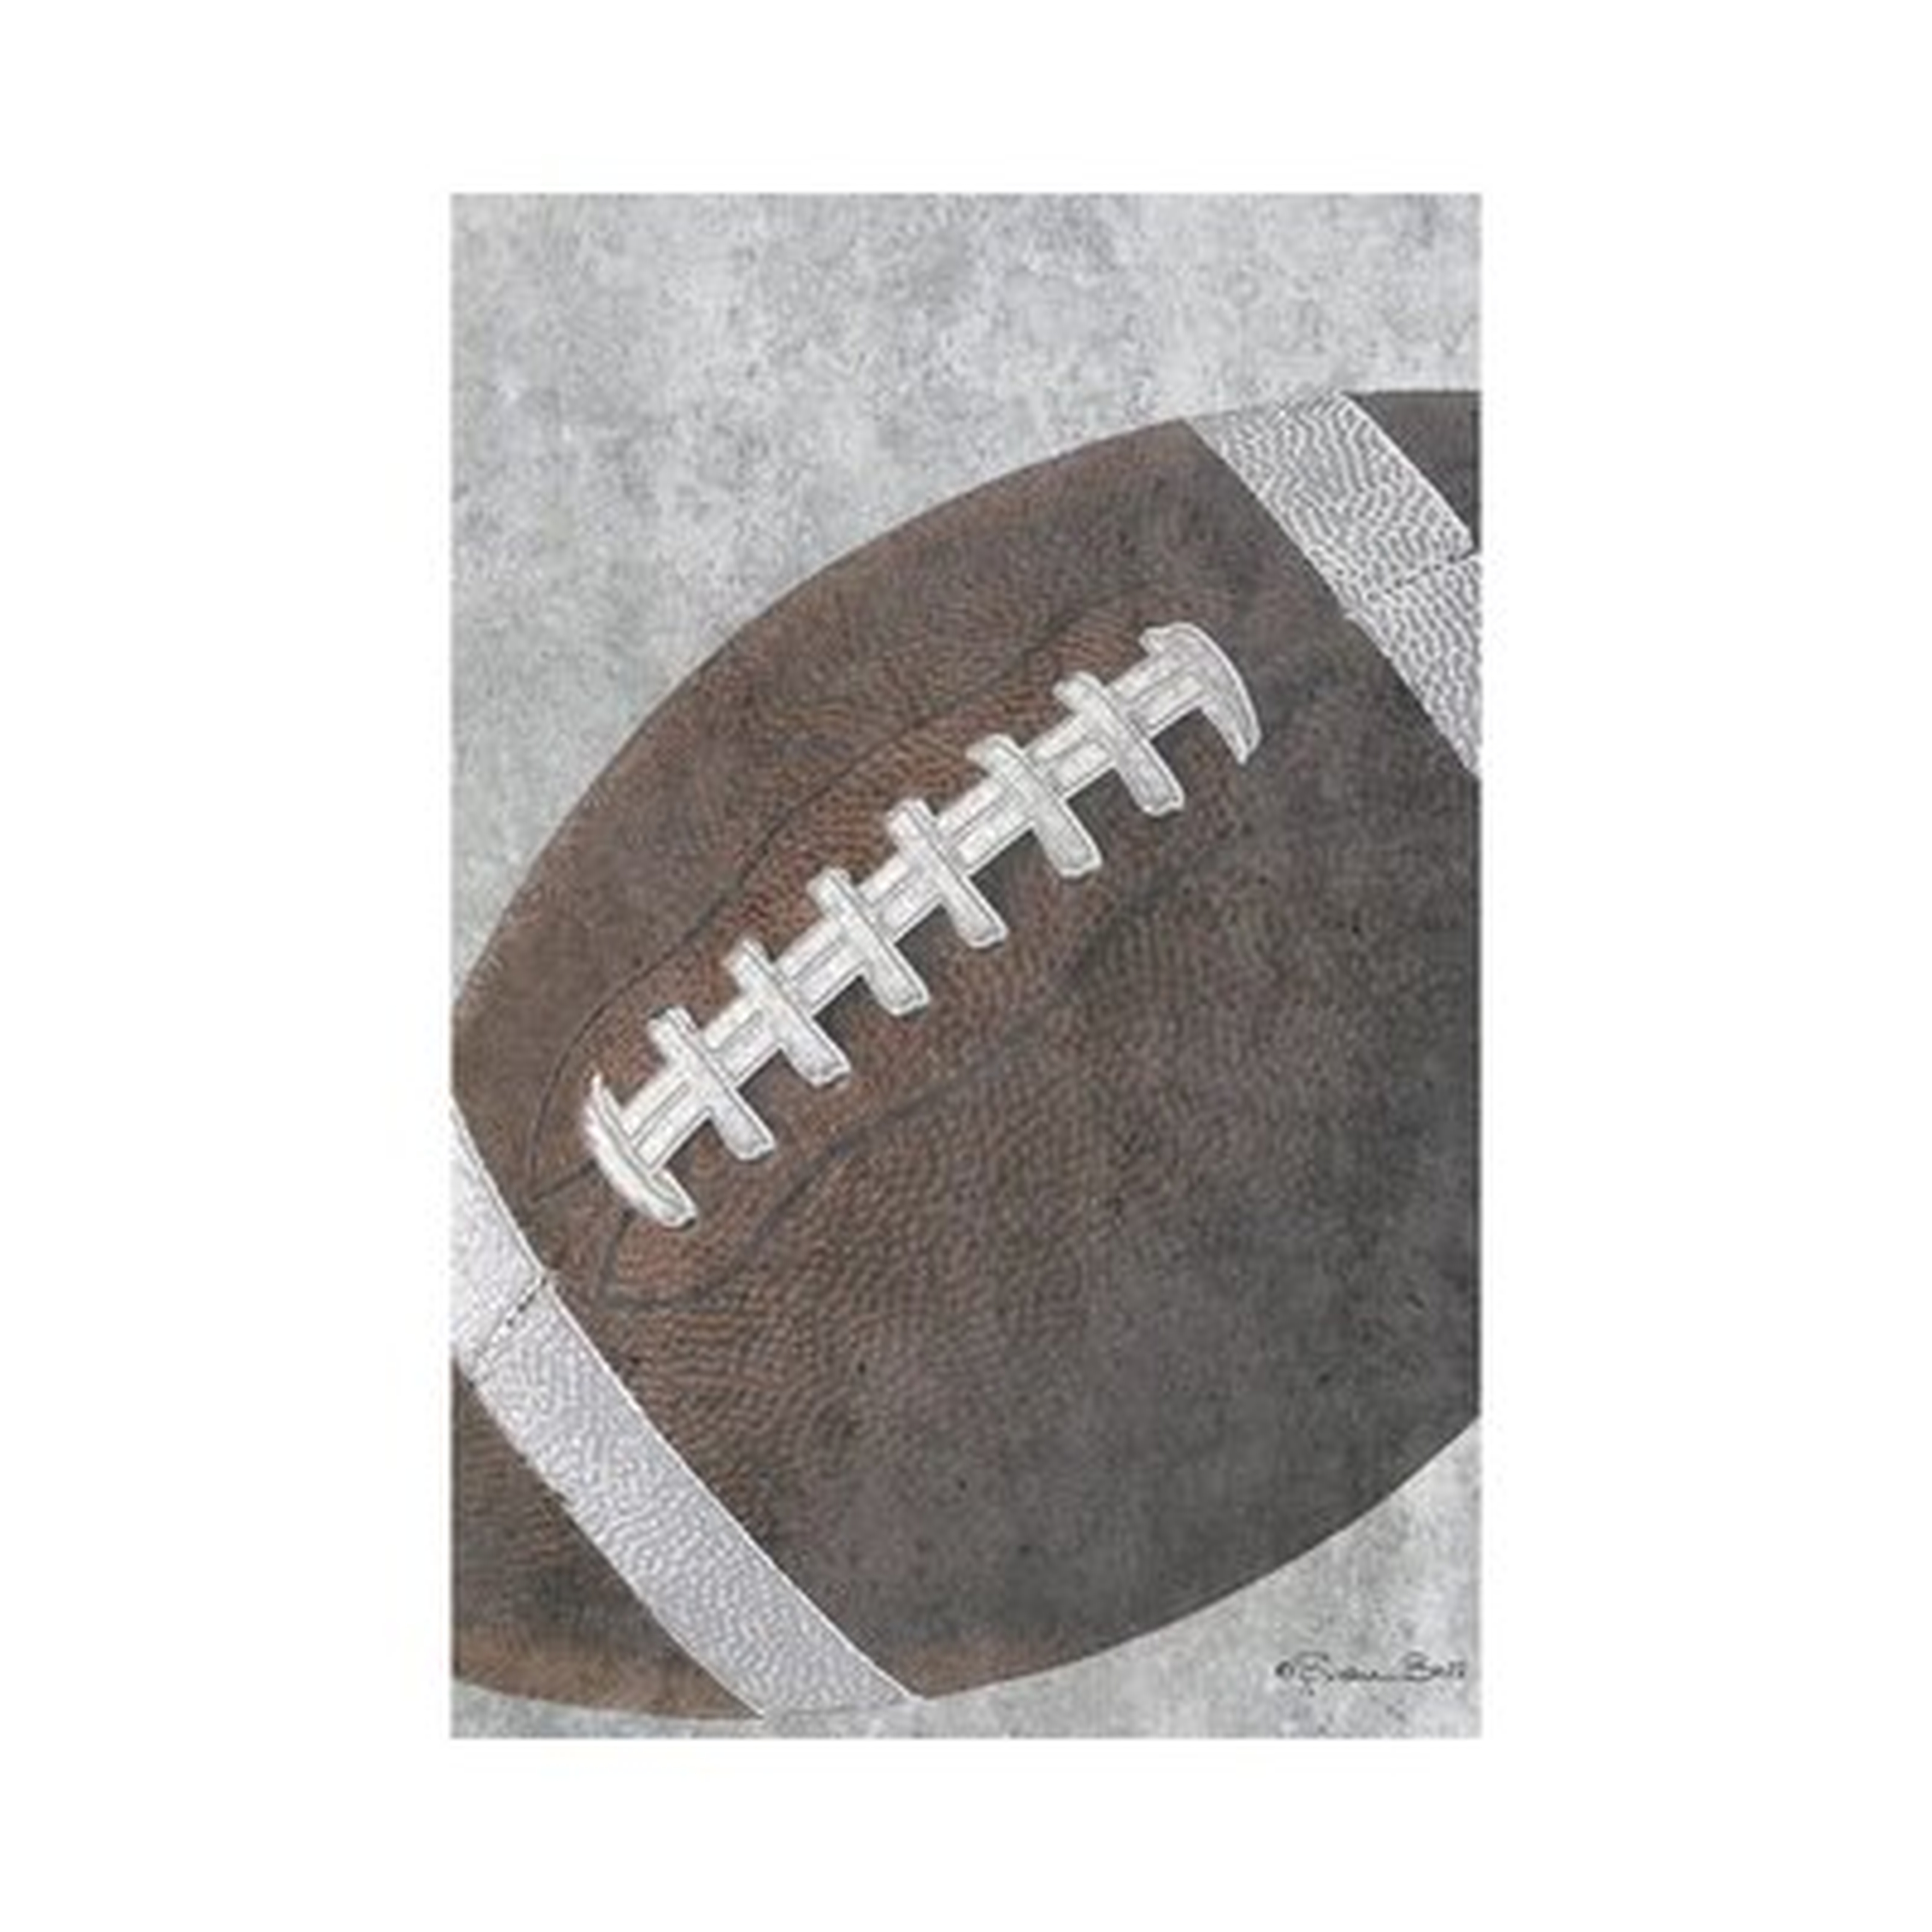 Sports Ball - Football by Susan Ball - Print - Wayfair